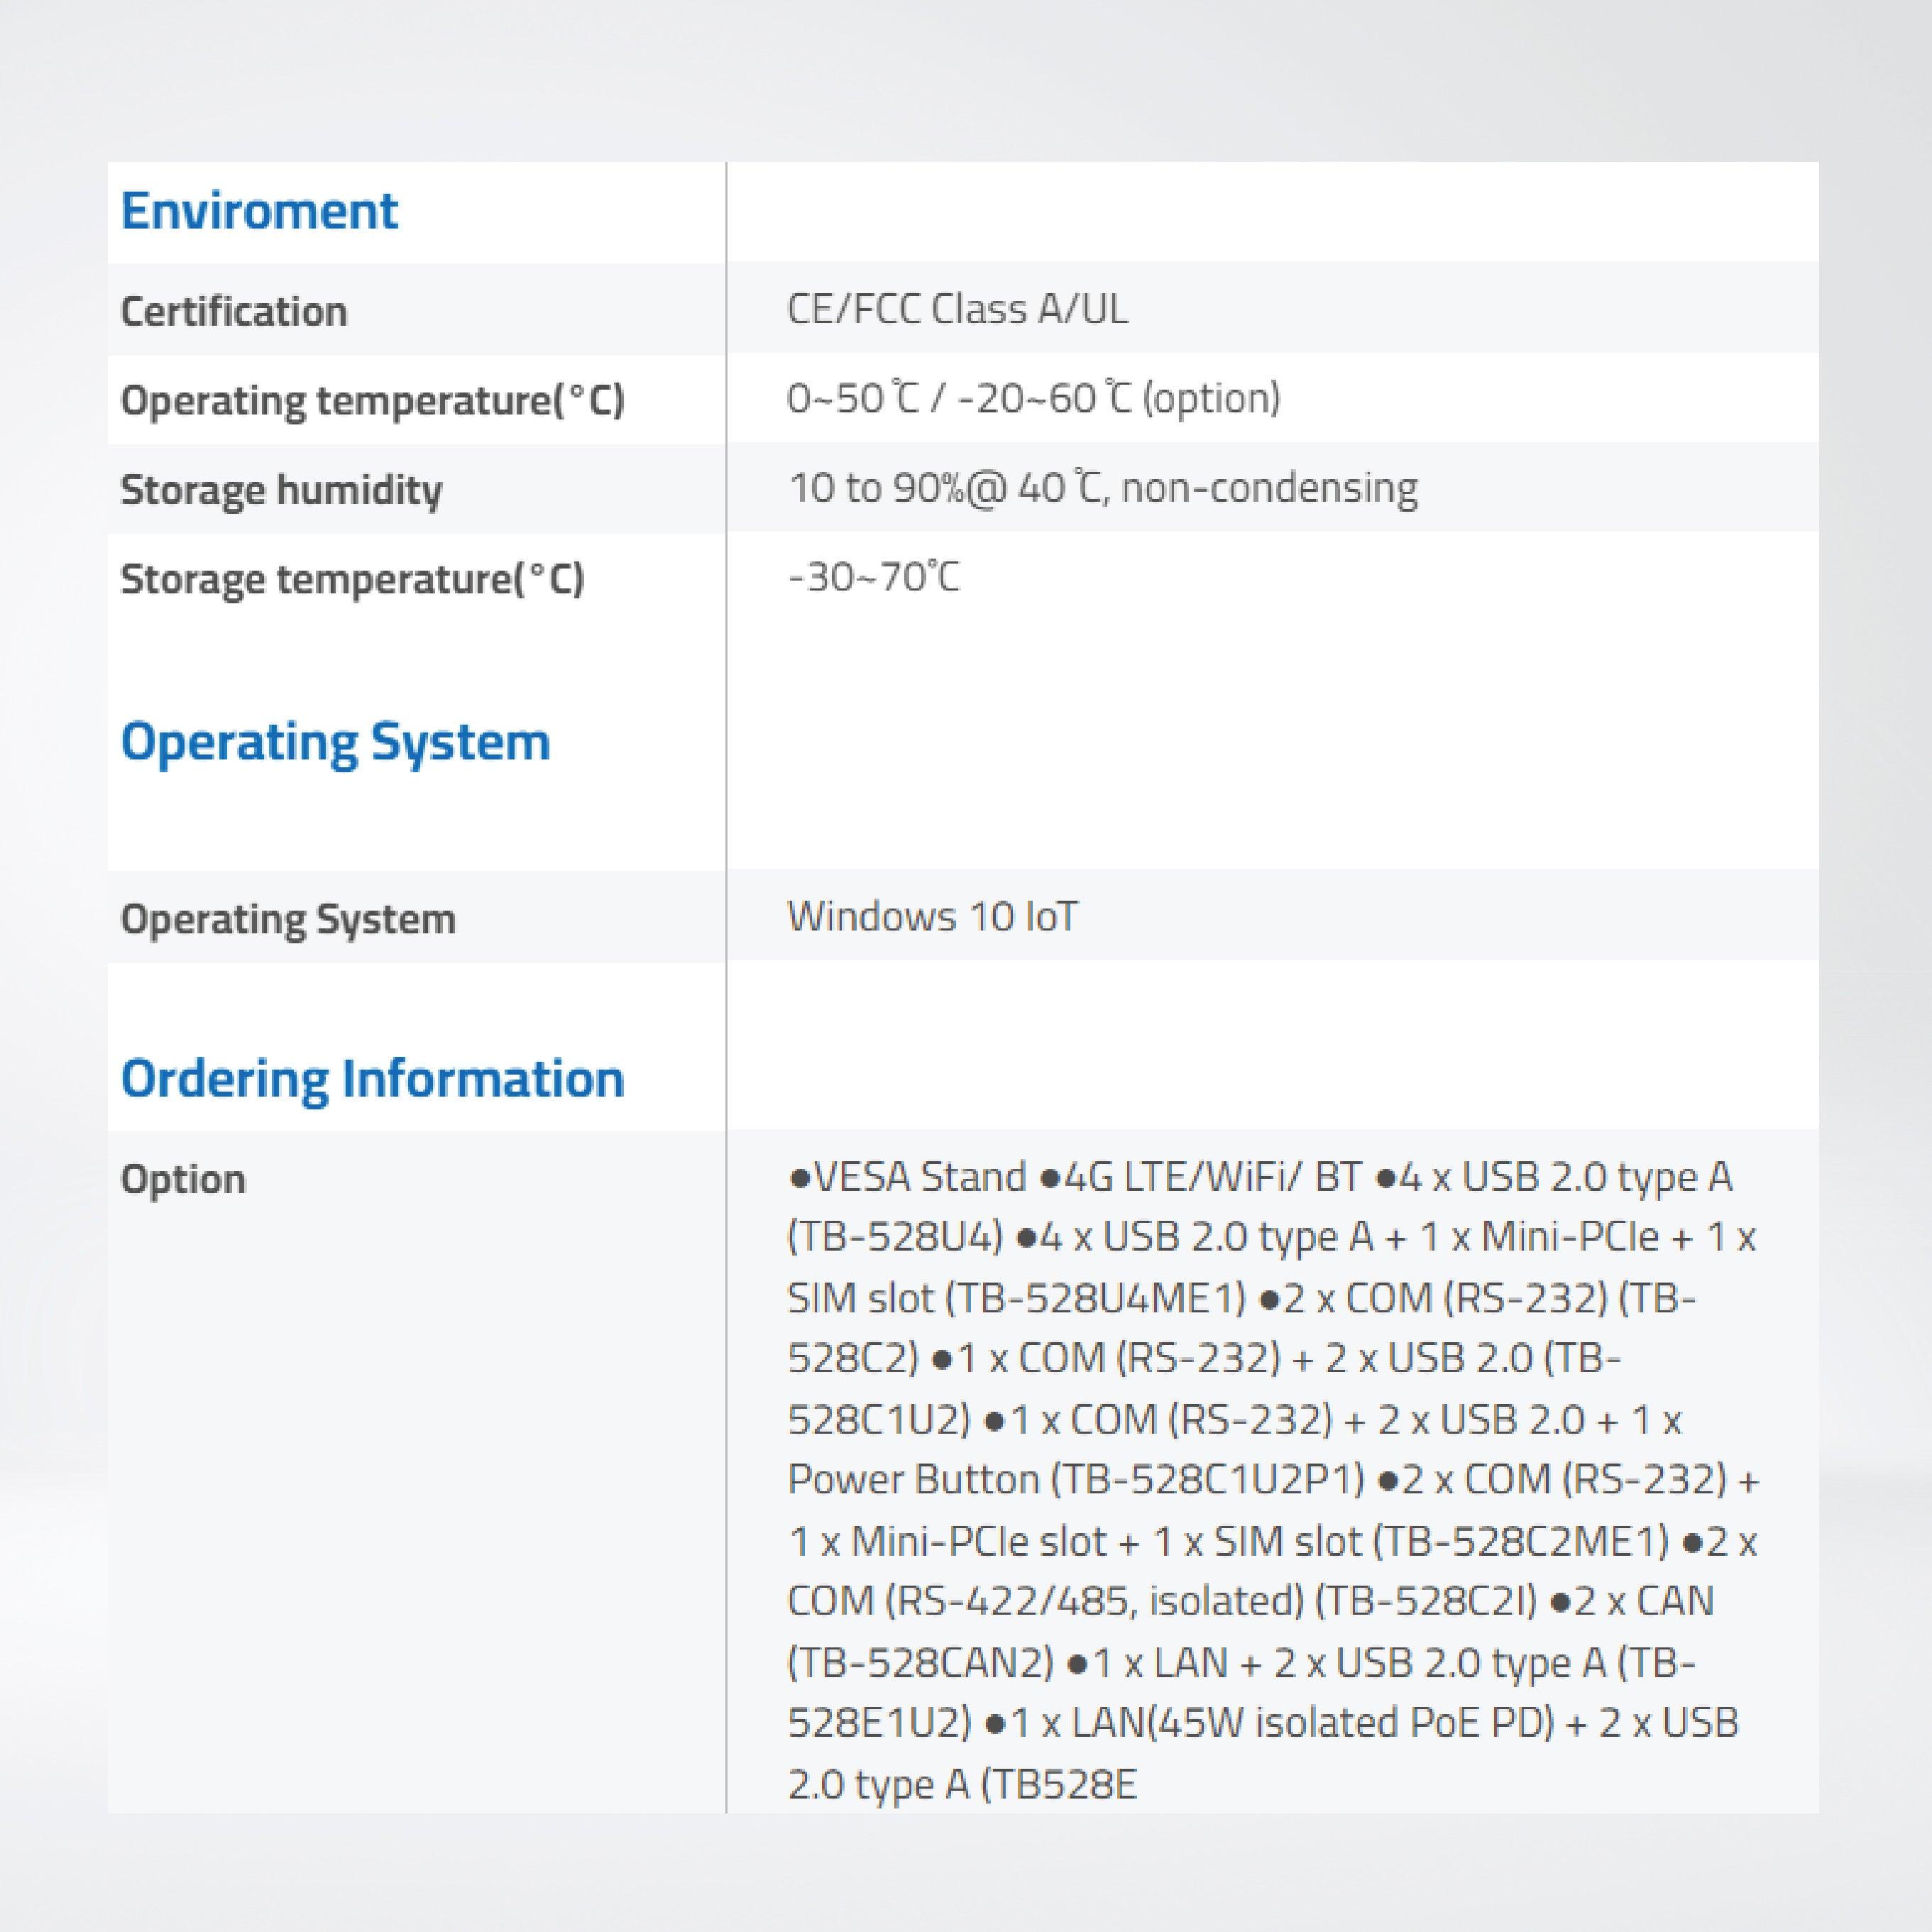 ARCHMI-816AR 15.6" Intel Apollo Lake N4200/N3350 Fanless Industrial Compact Size Panel PC - Riverplus